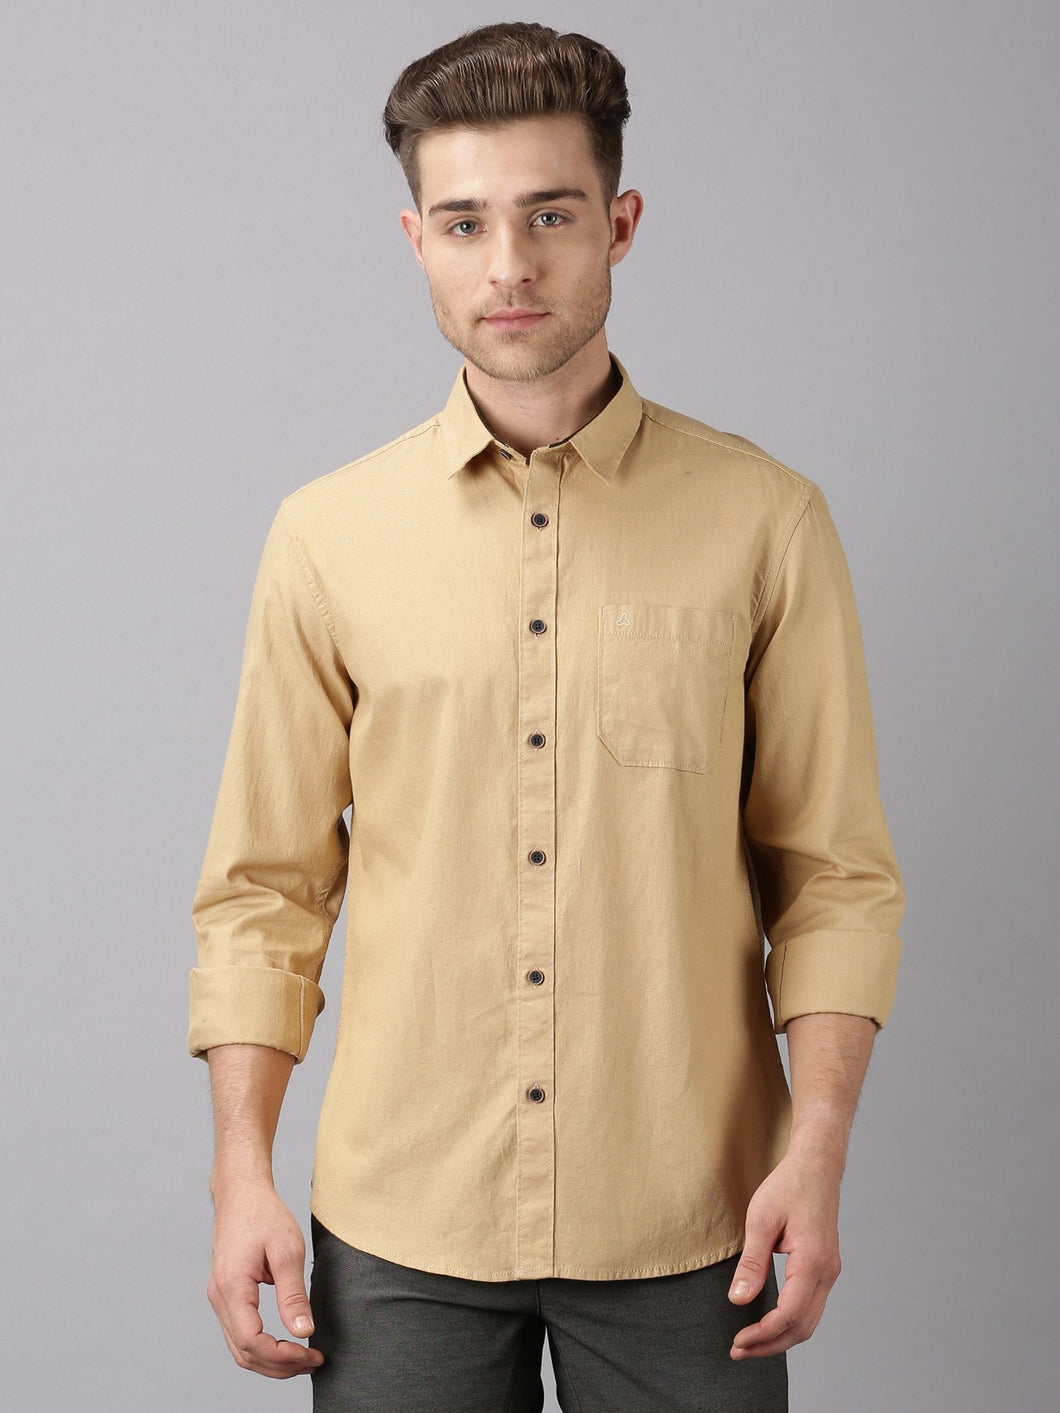 Polycotton Light khaki color Full Sleeve Formal shirt